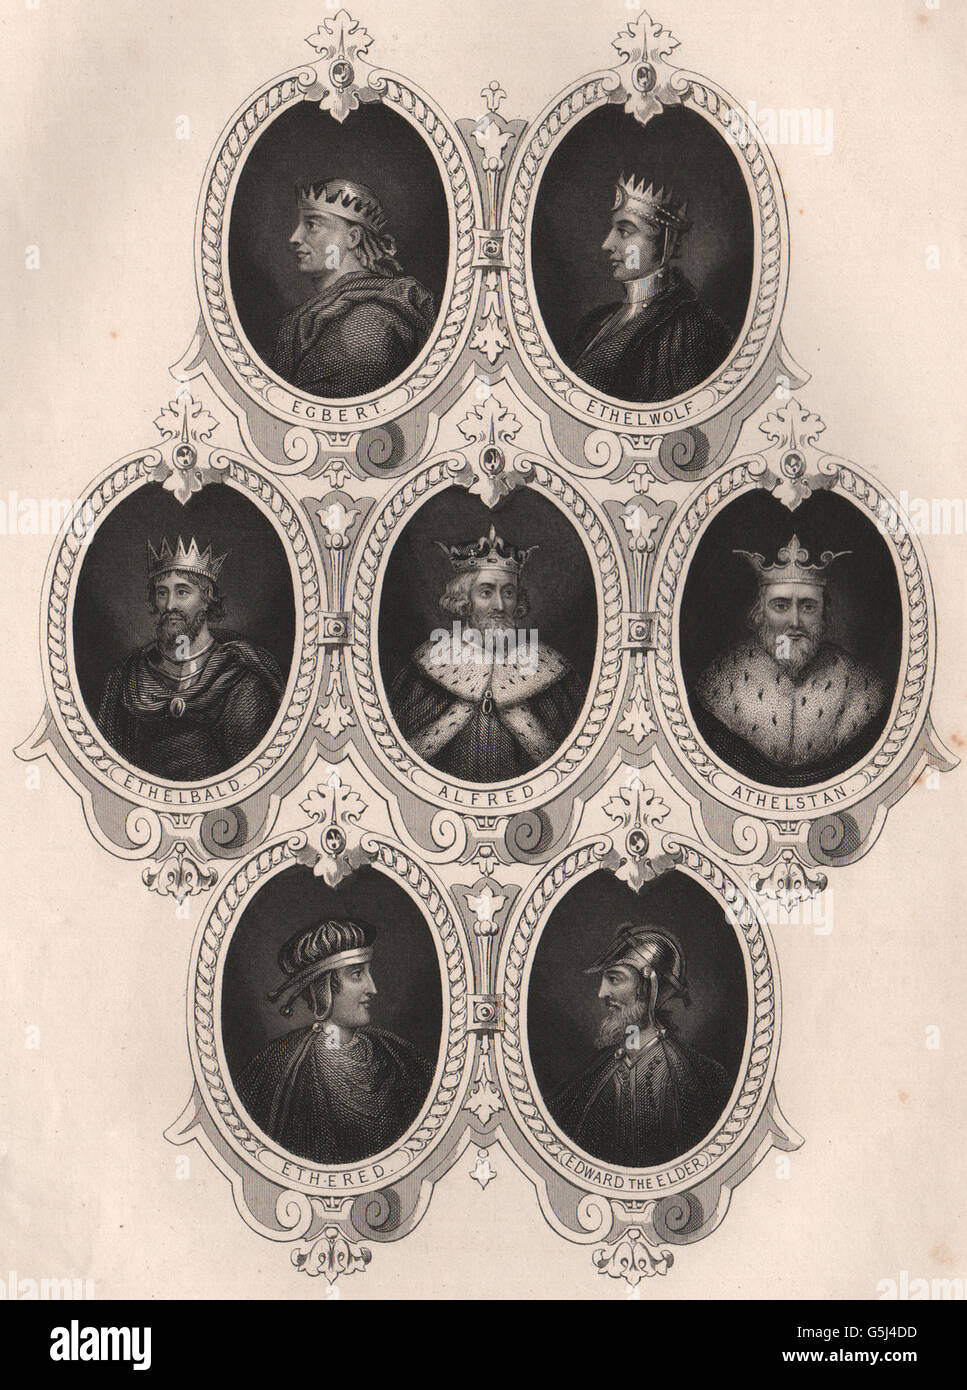 Rois Anglais : Edbert Ethelwolf Ethelbald Alfred Athelstan Ethered Edward, 1853 Banque D'Images